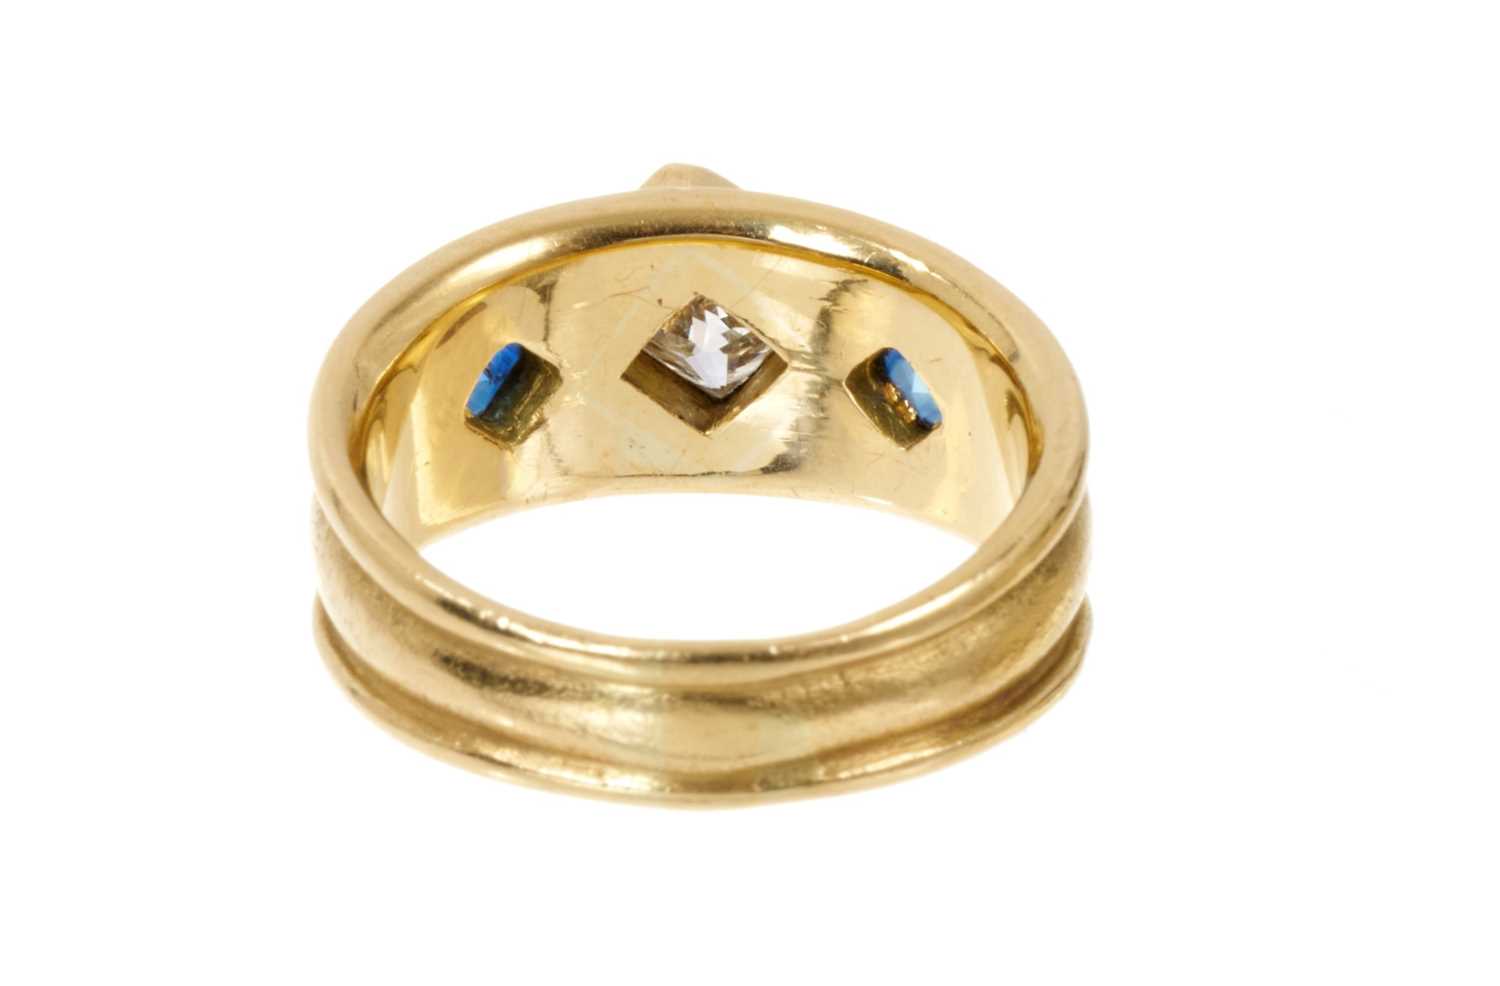 Diamond and sapphire Templar ring - Image 3 of 3